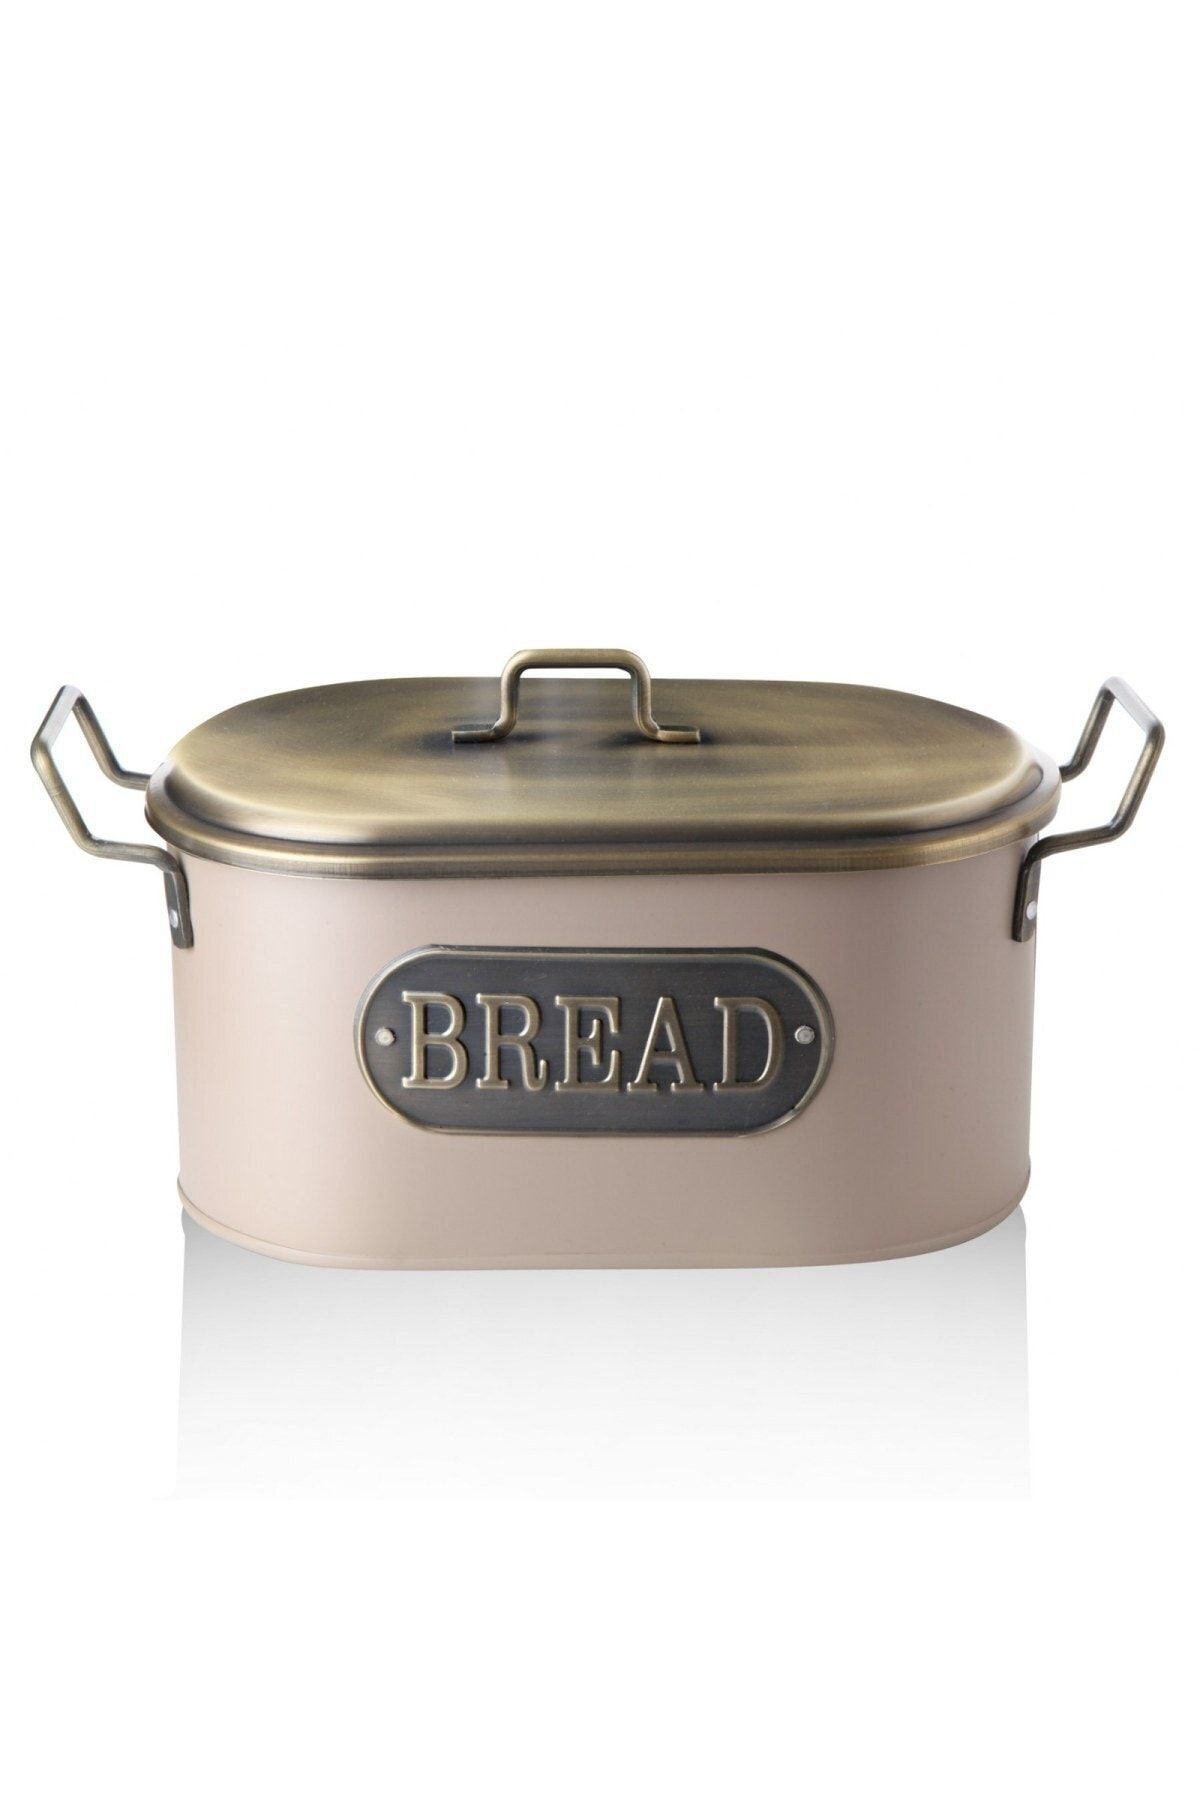 Home Naturel Ekmek Saklama Kabı Ekmek Kutusu Metal Krem Metal 32 Cm